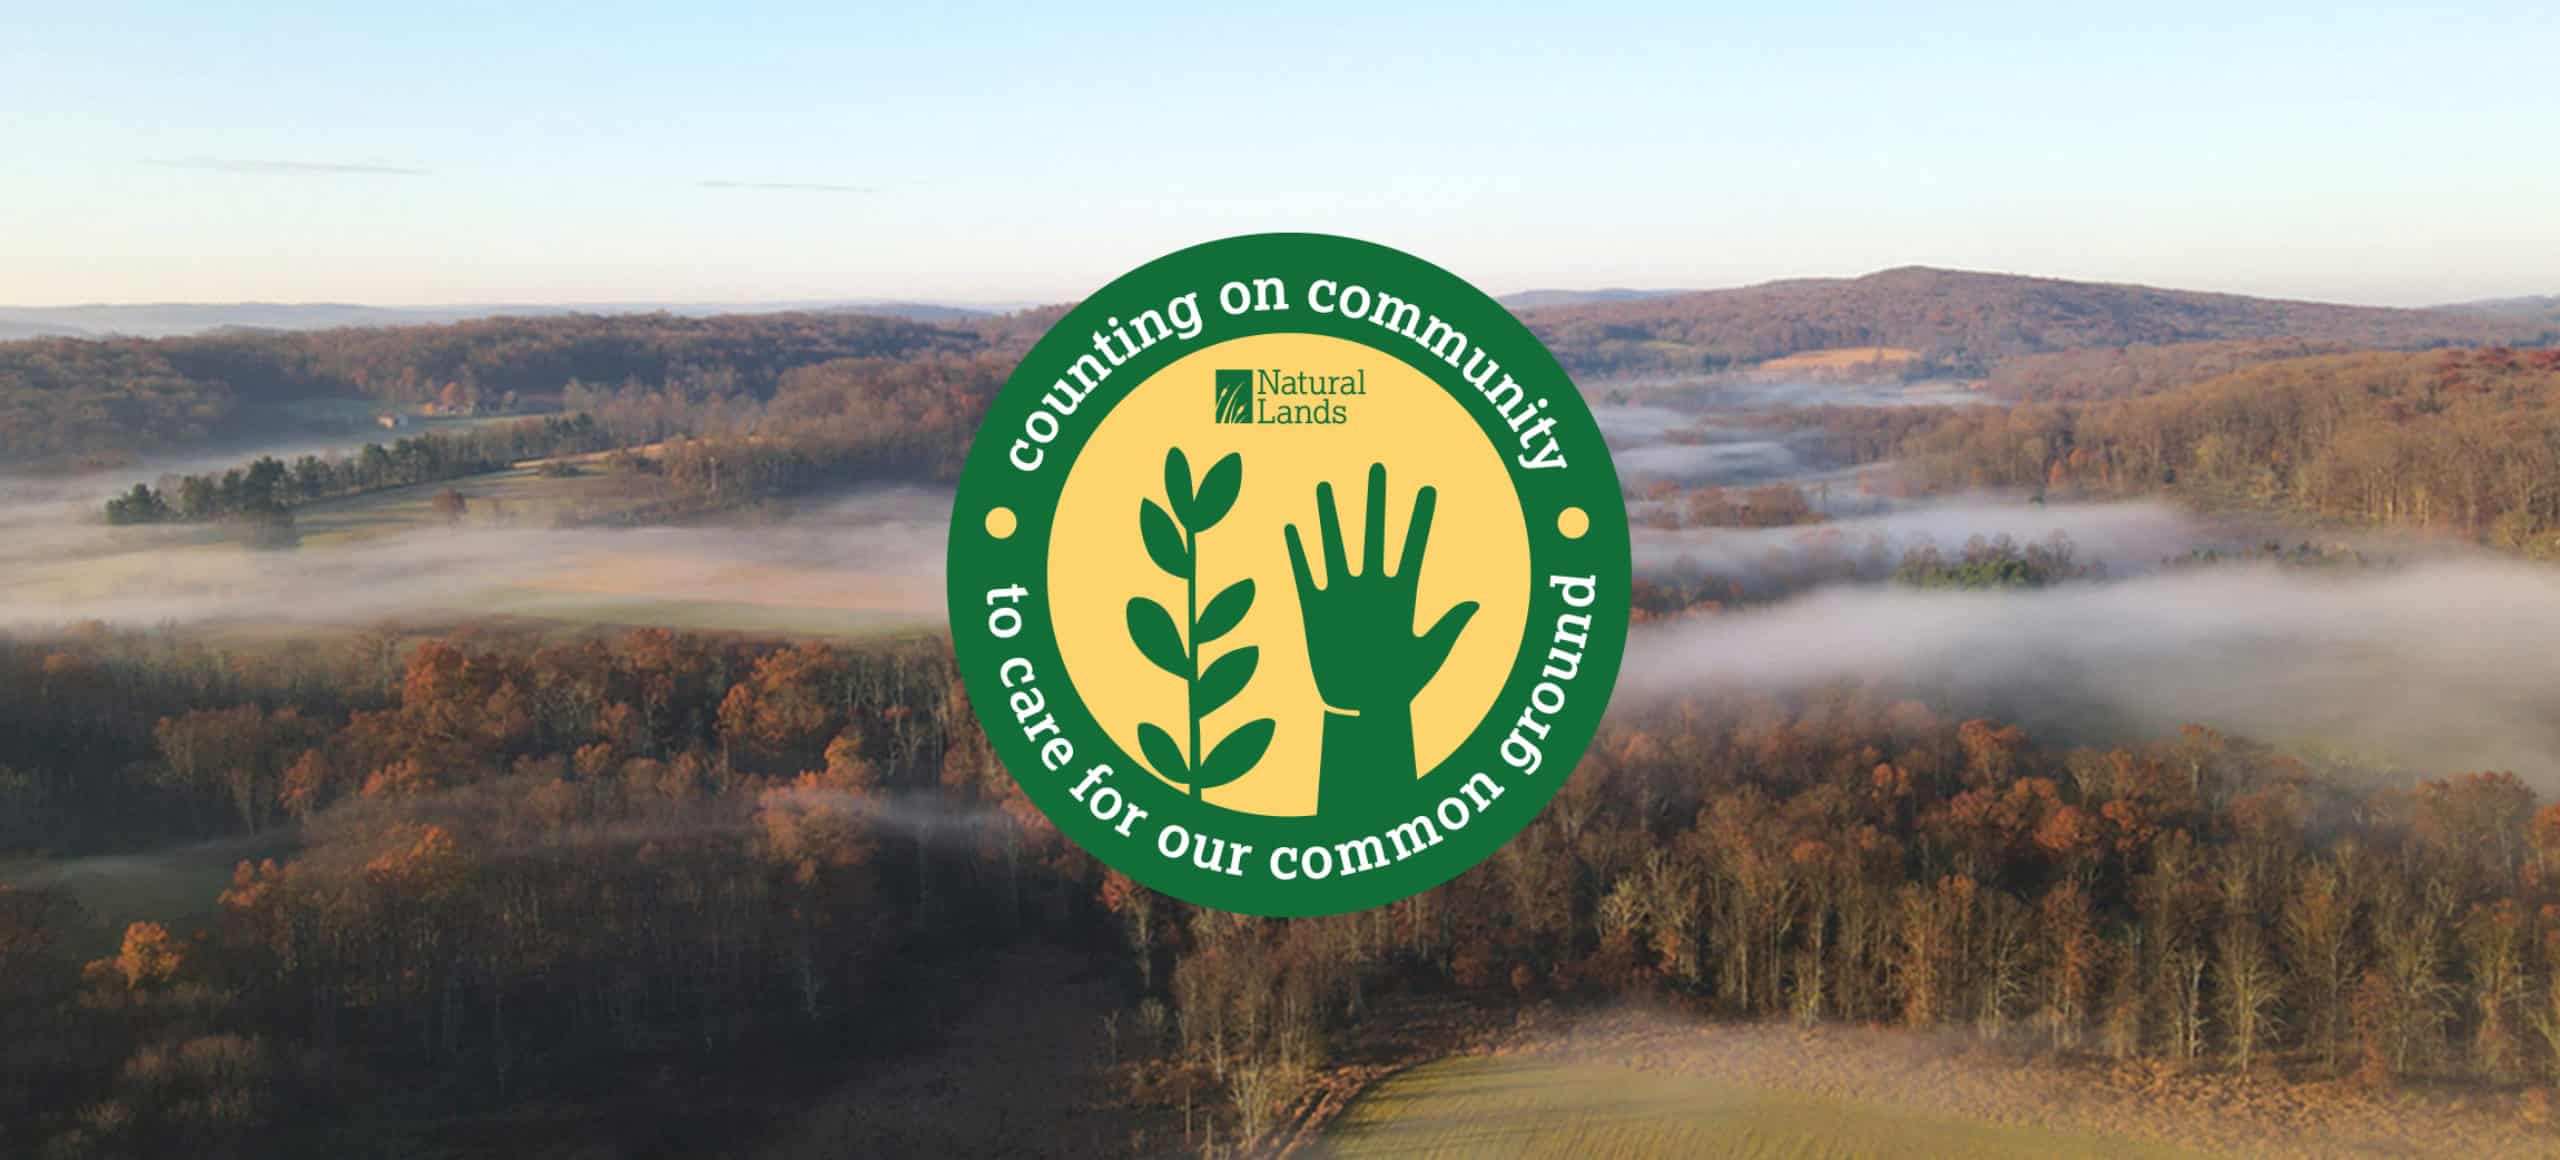 County on Community Logo